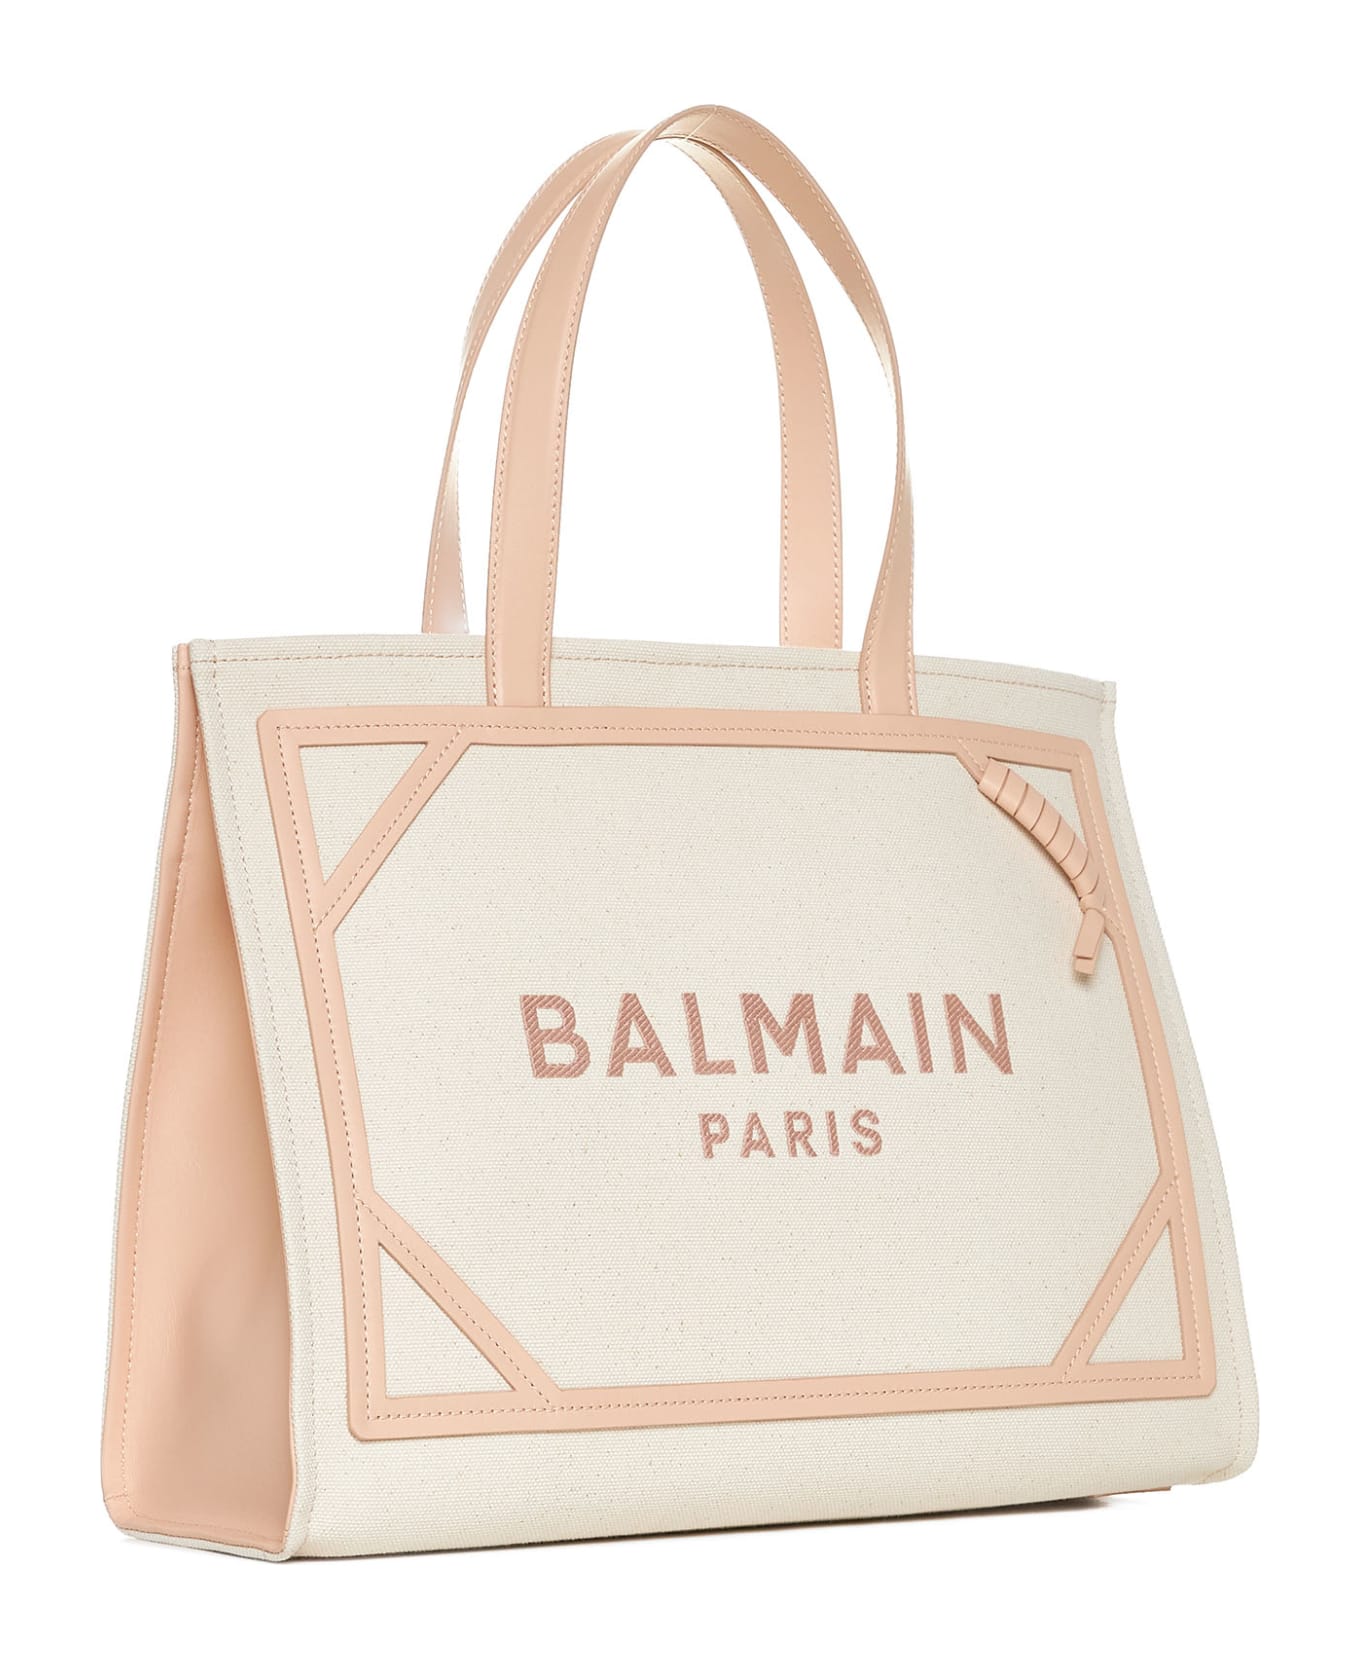 Balmain Shopping Bag - Creme/nude rosè トートバッグ